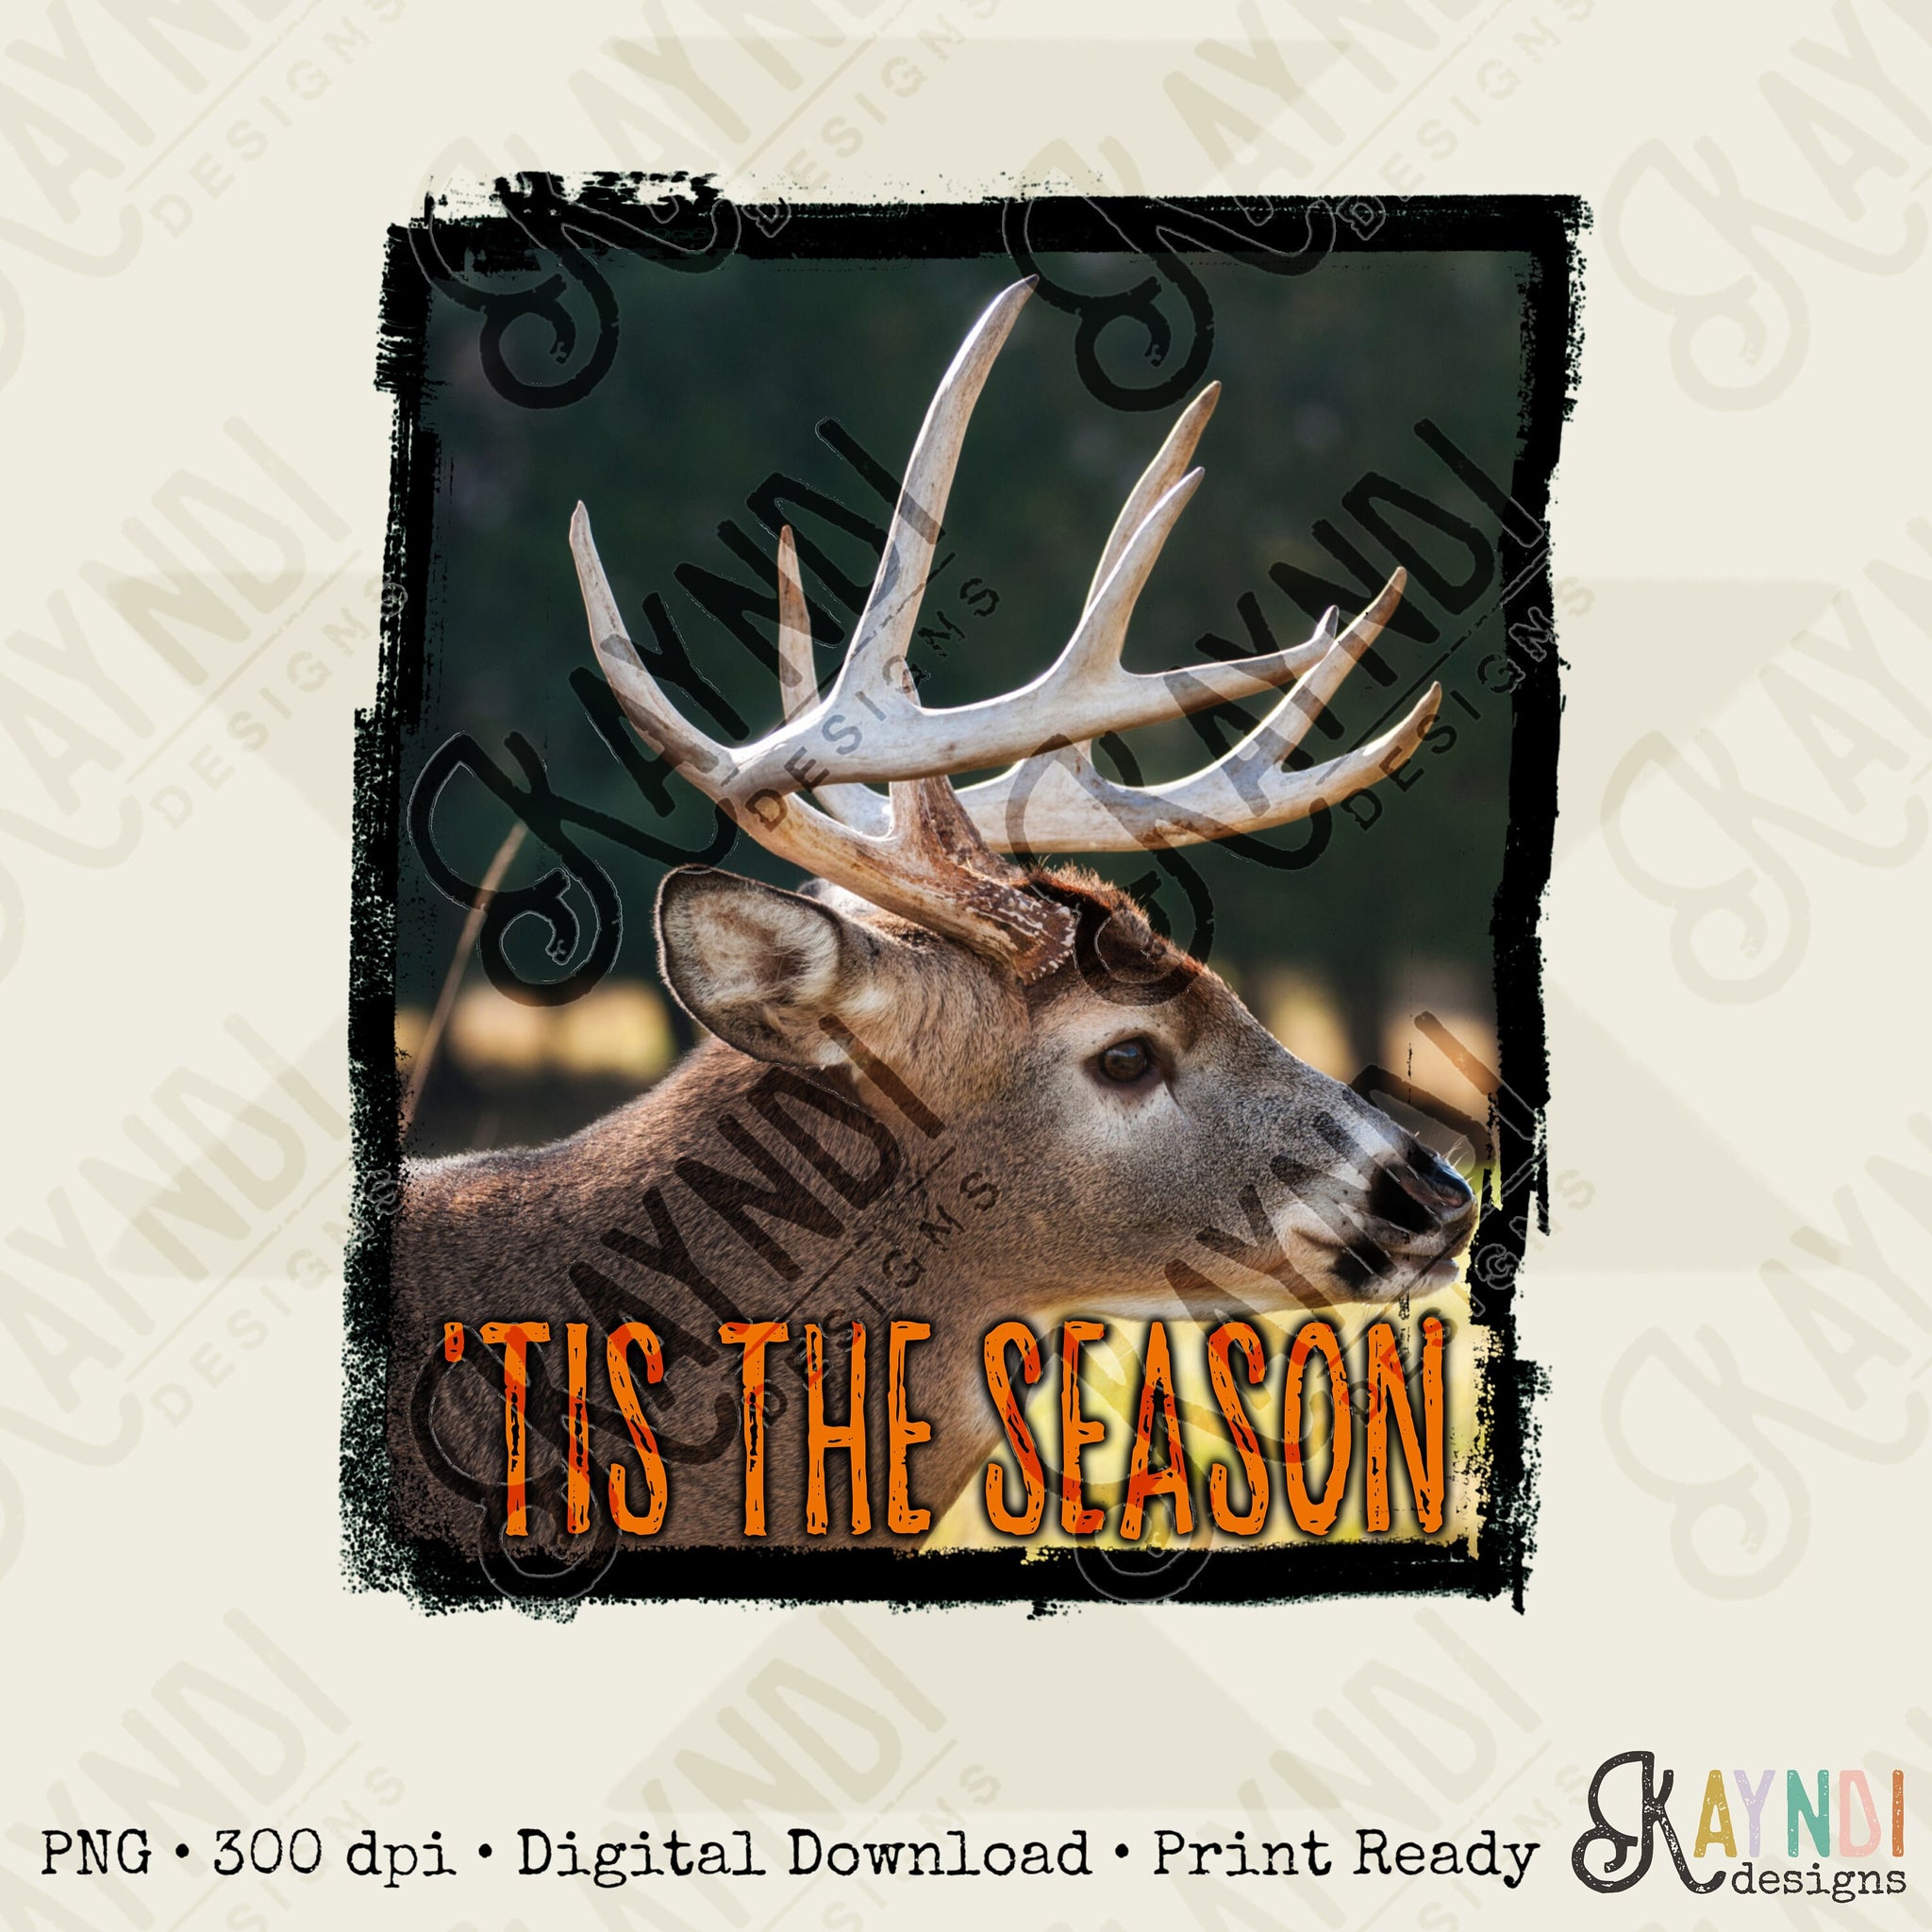 Tis The Season Deer Season Hunting Season Men’s Sublimation Design Png Digital Download Camouflage Manly Men’s Shirt Design DTG Printing